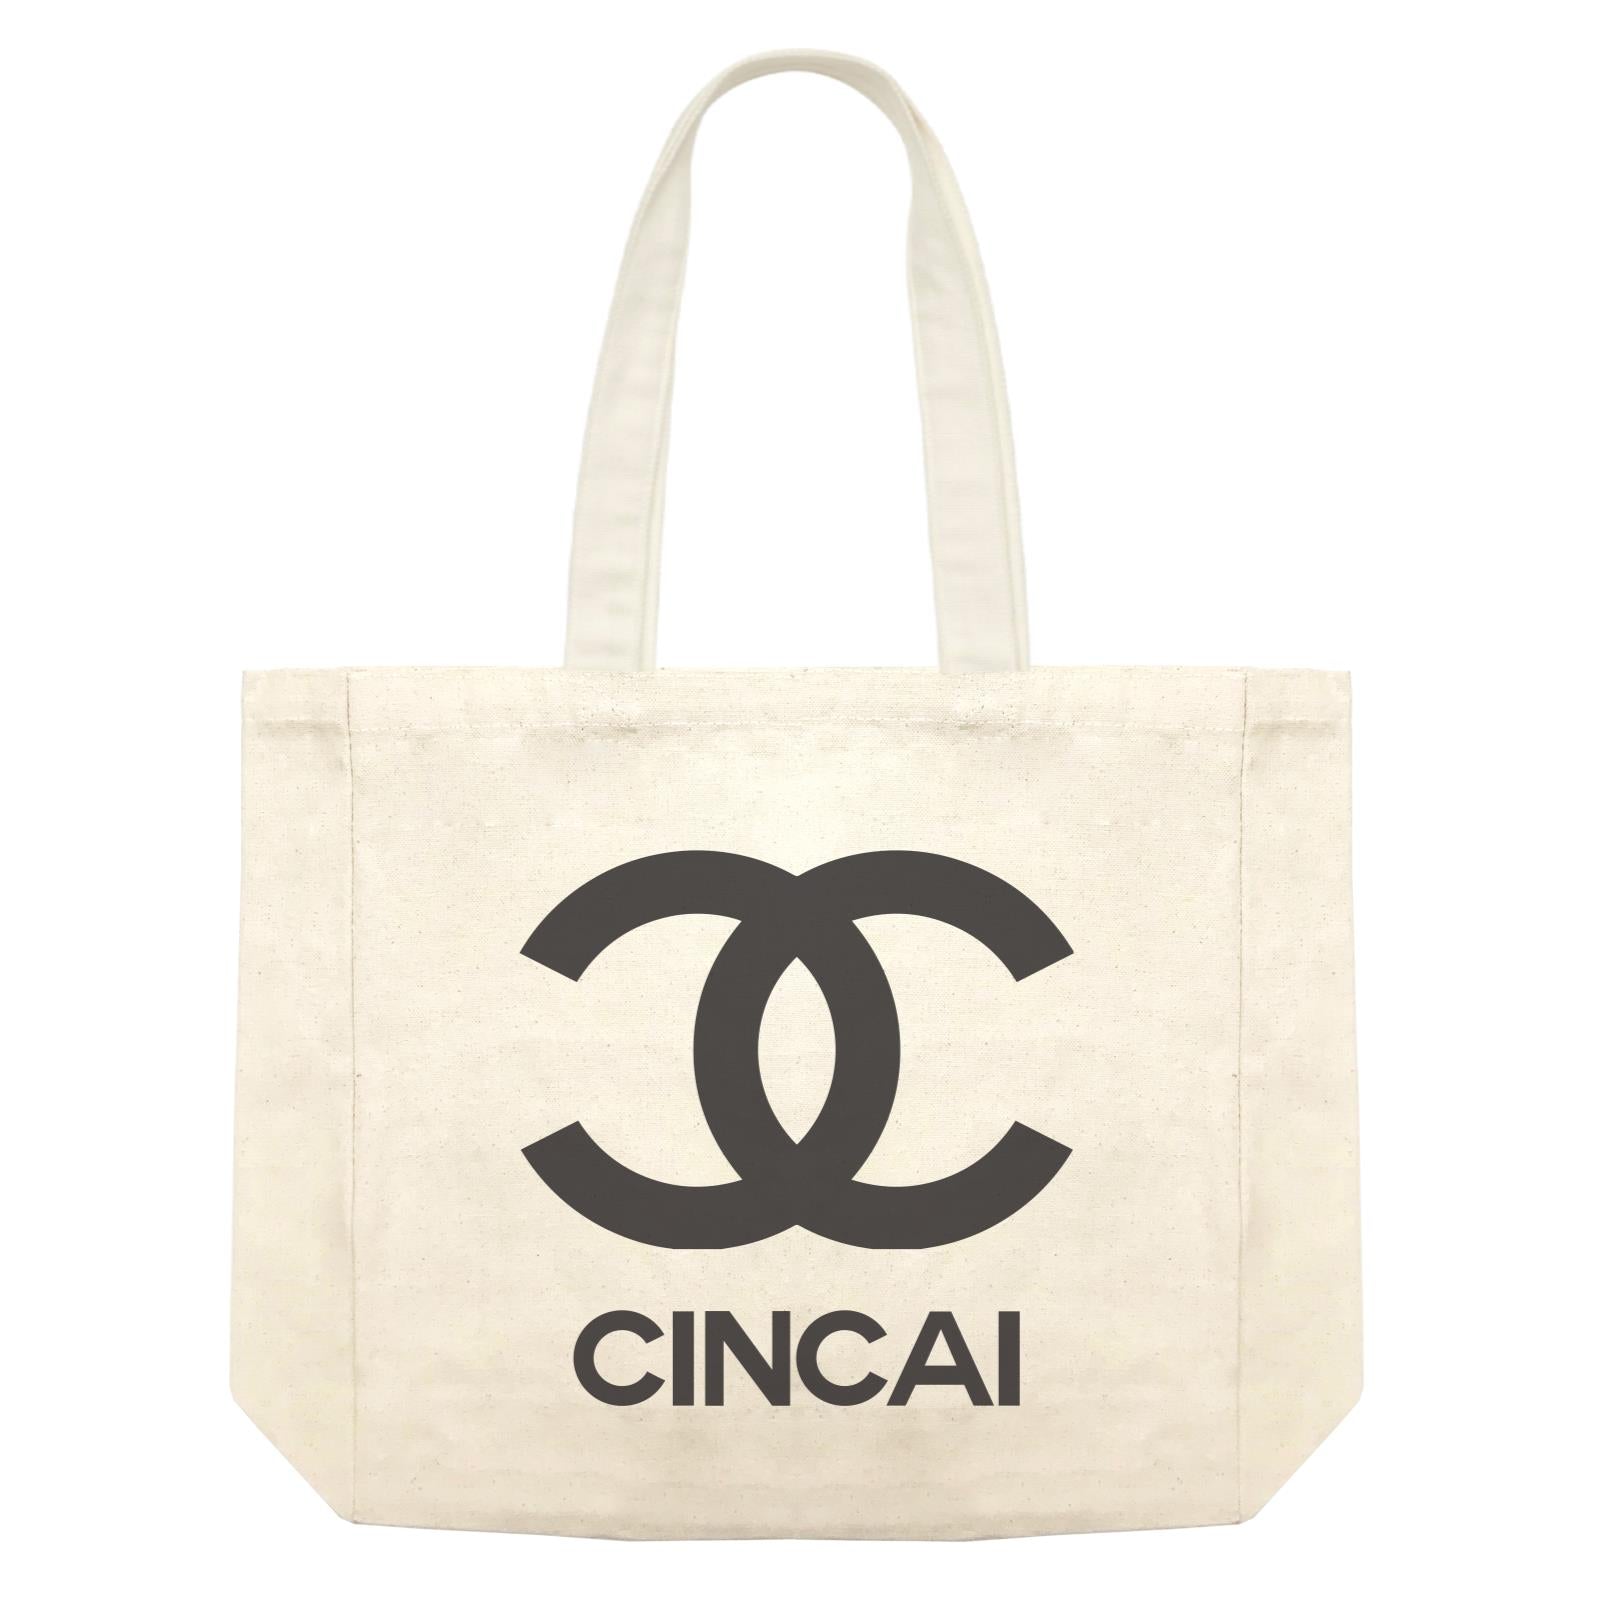 Slang Statement Cincai Accessories Shopping Bag